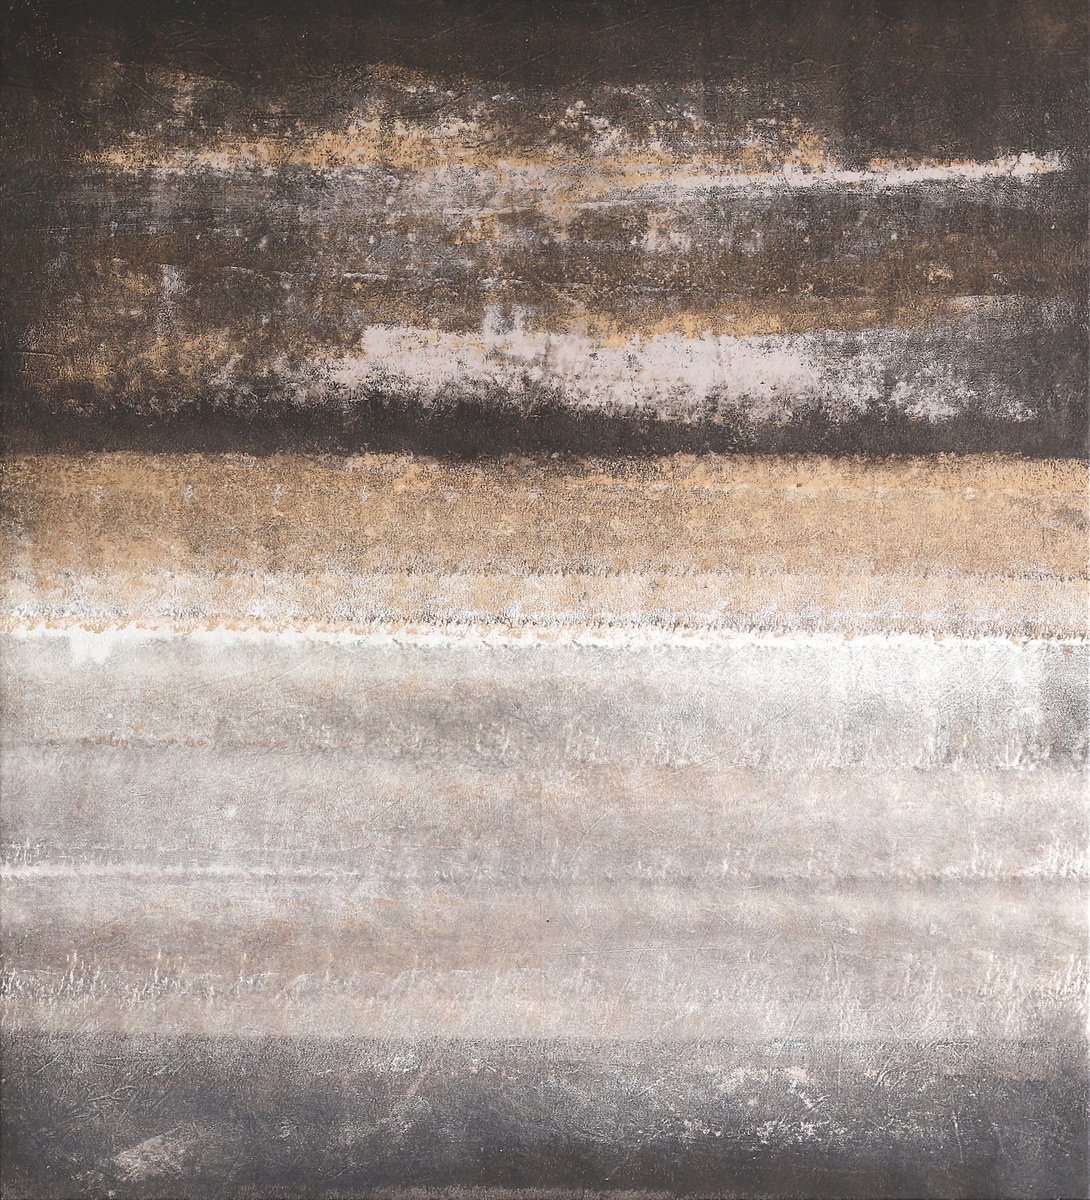 No. 19-5 (135 x 150 cm) by Rokas Berziunas